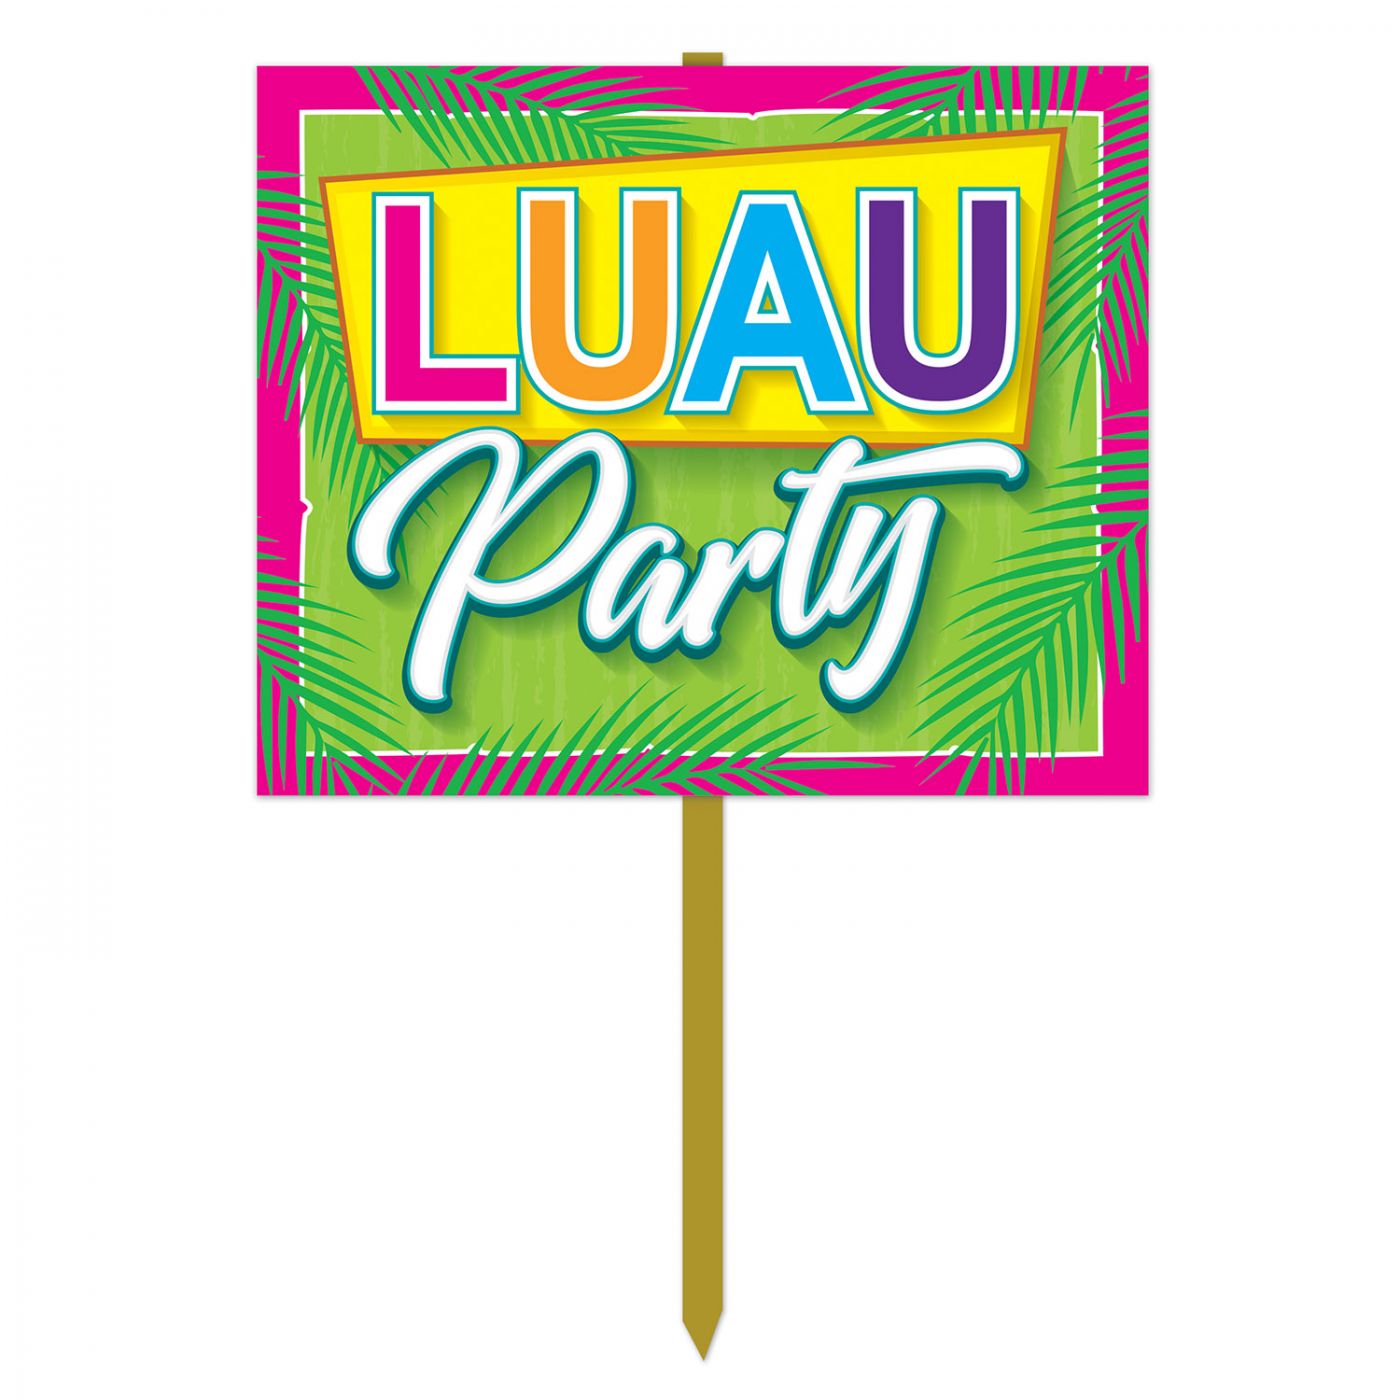 Luau Party Yard Sign image